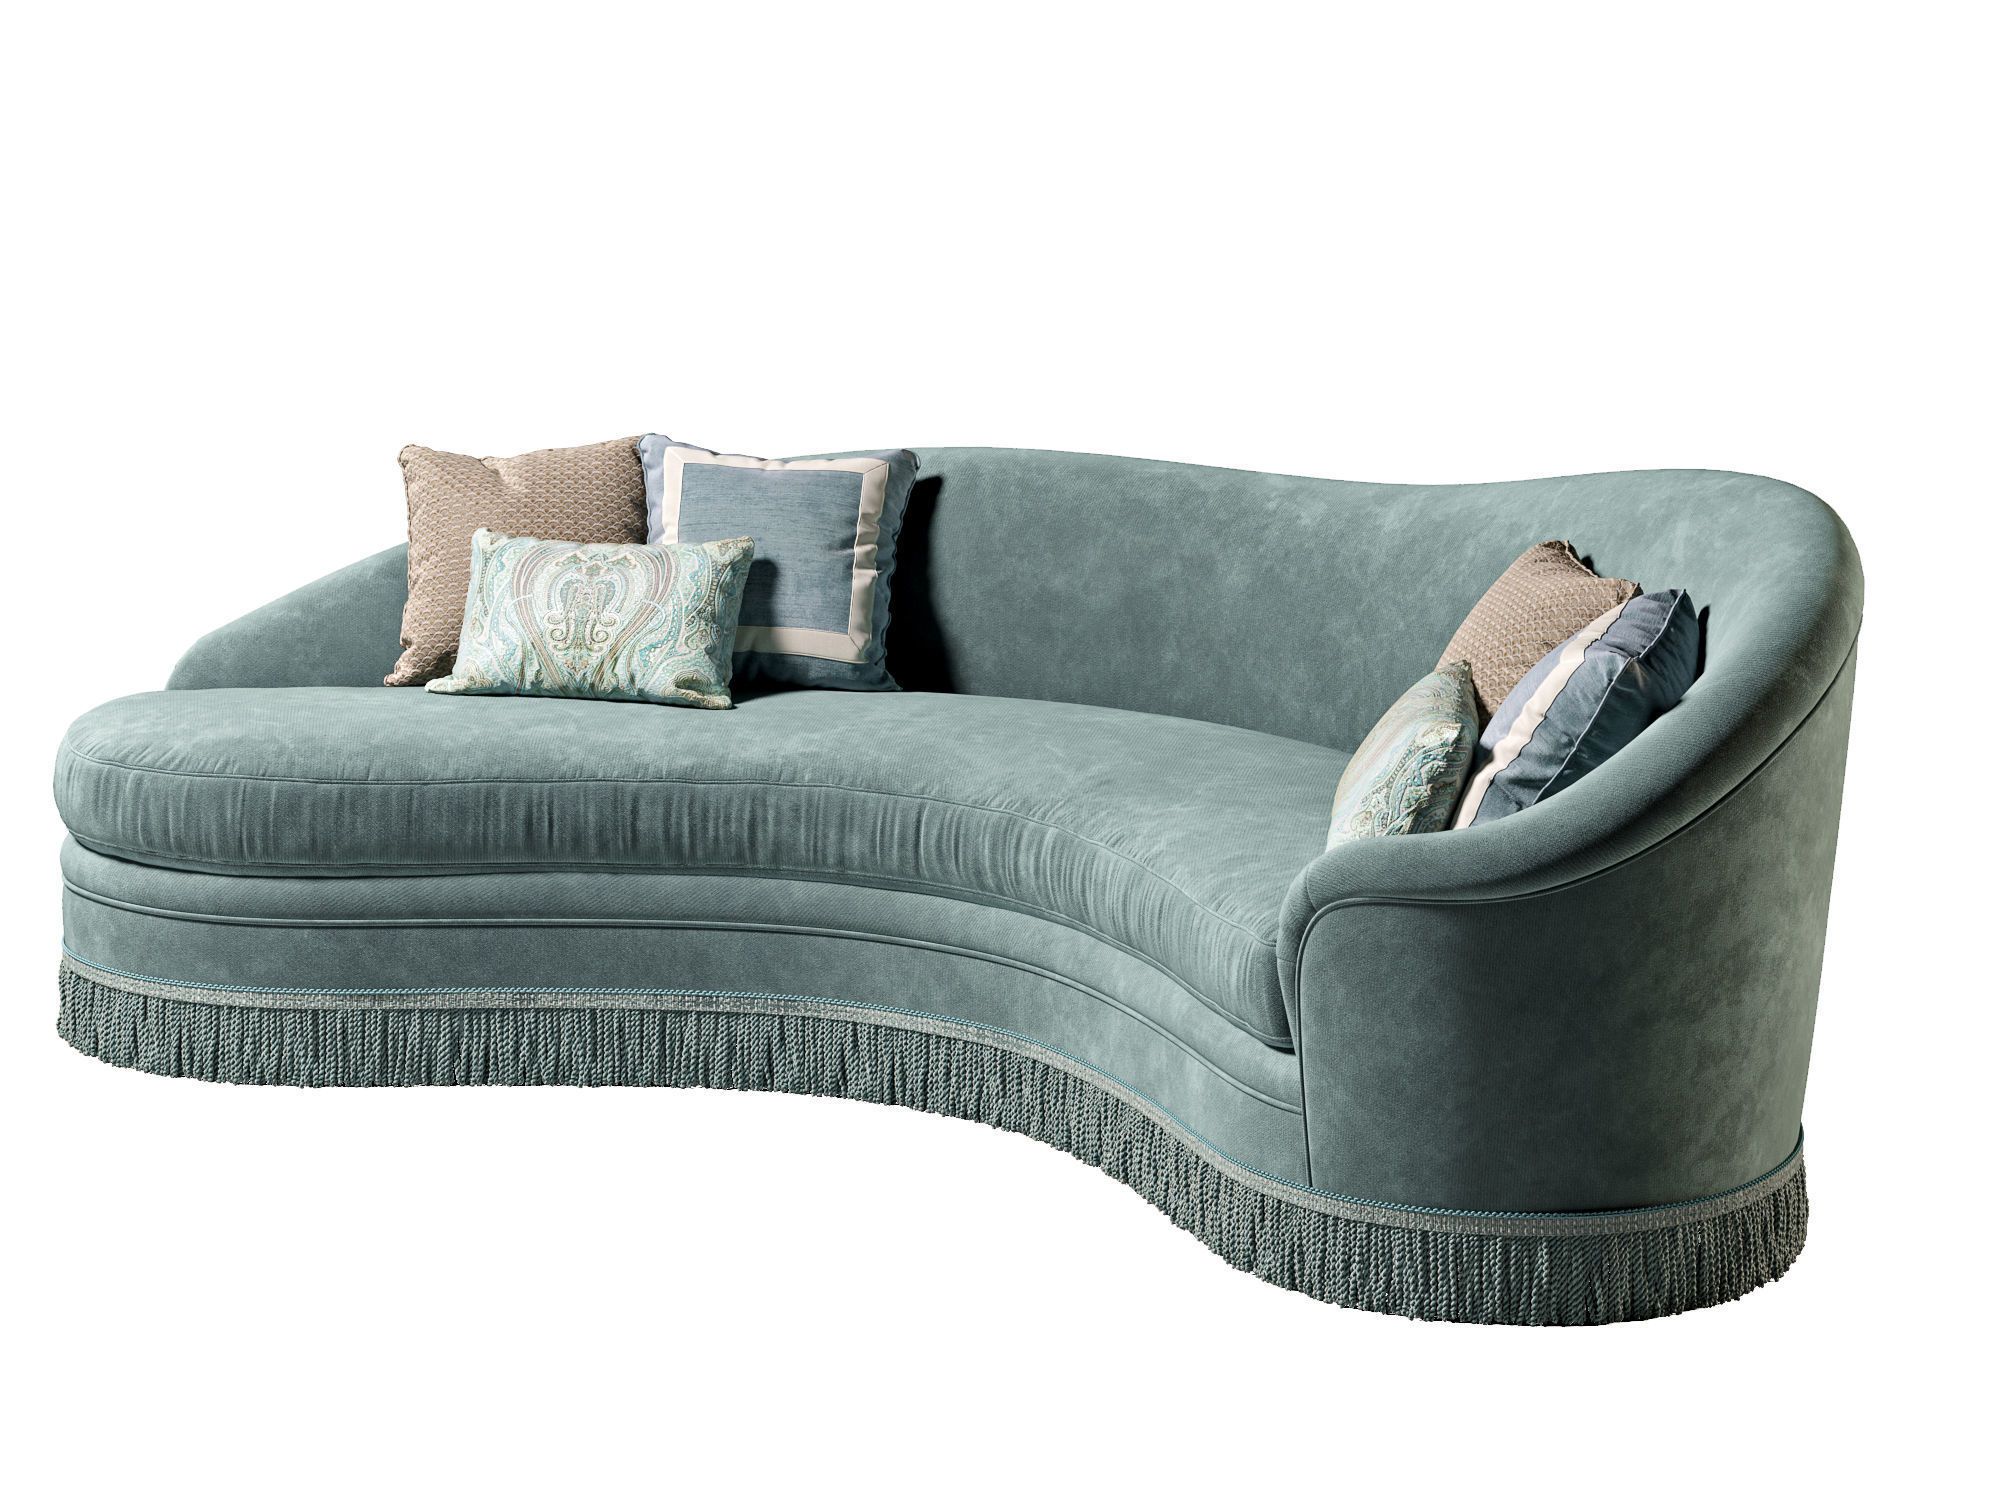 3D Model Jumbo Round Sofa Ple 00 | Cgtrader With Regard To Round Sofas (View 7 of 15)